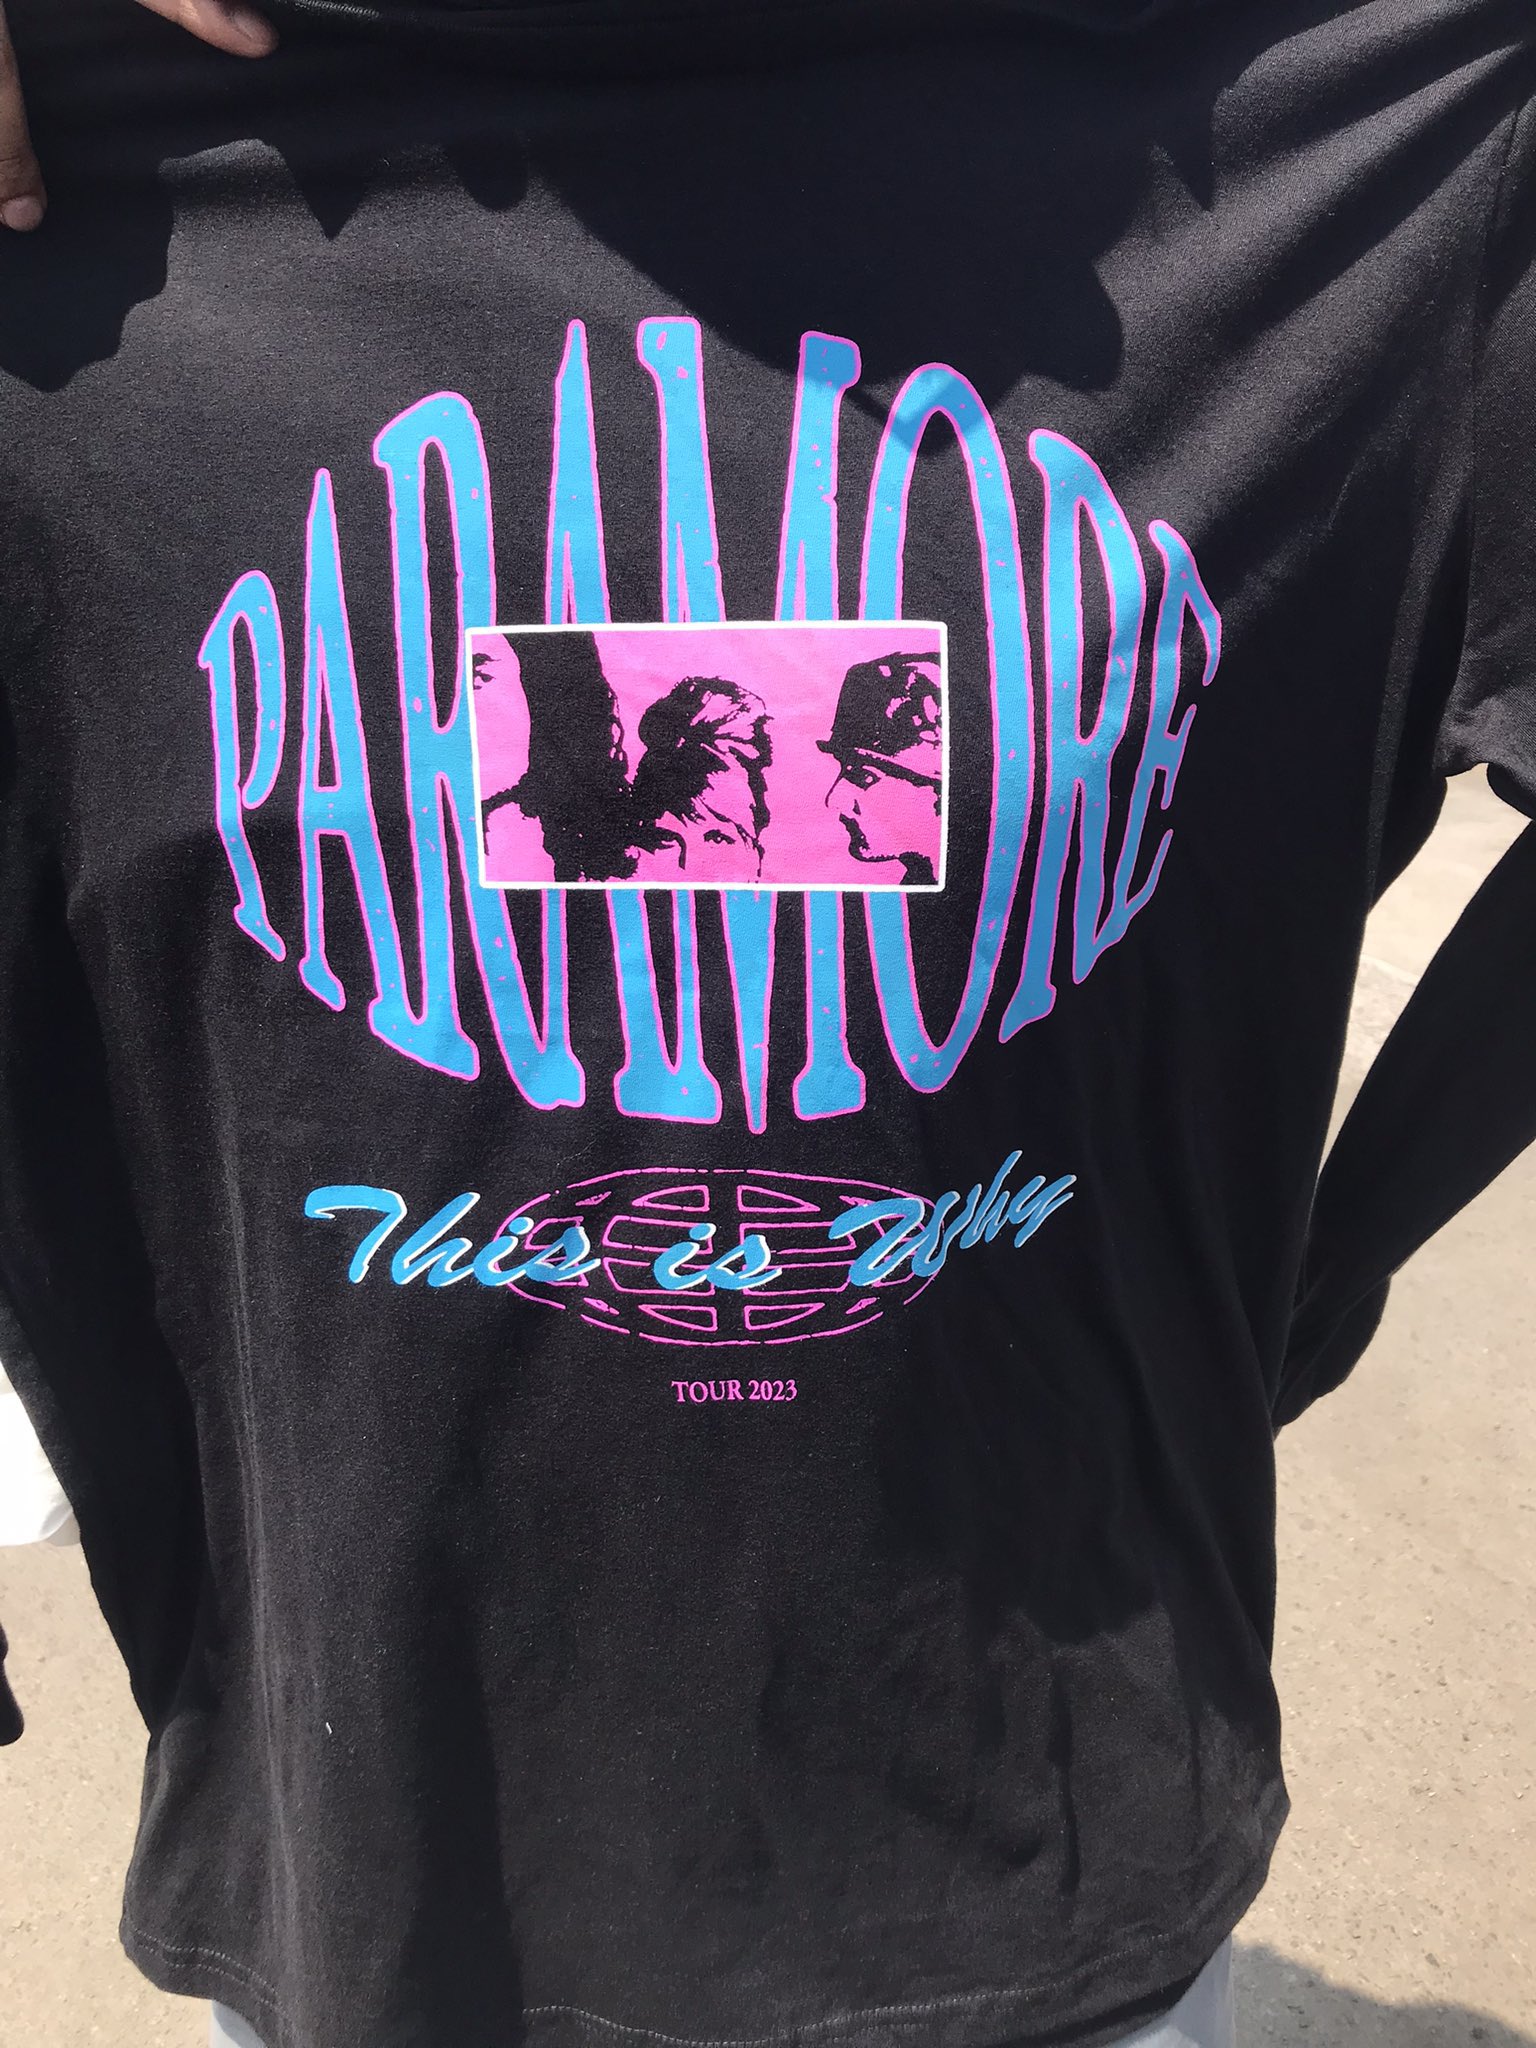 Paramore Little Rain Cloud Fan Art T-Shirt